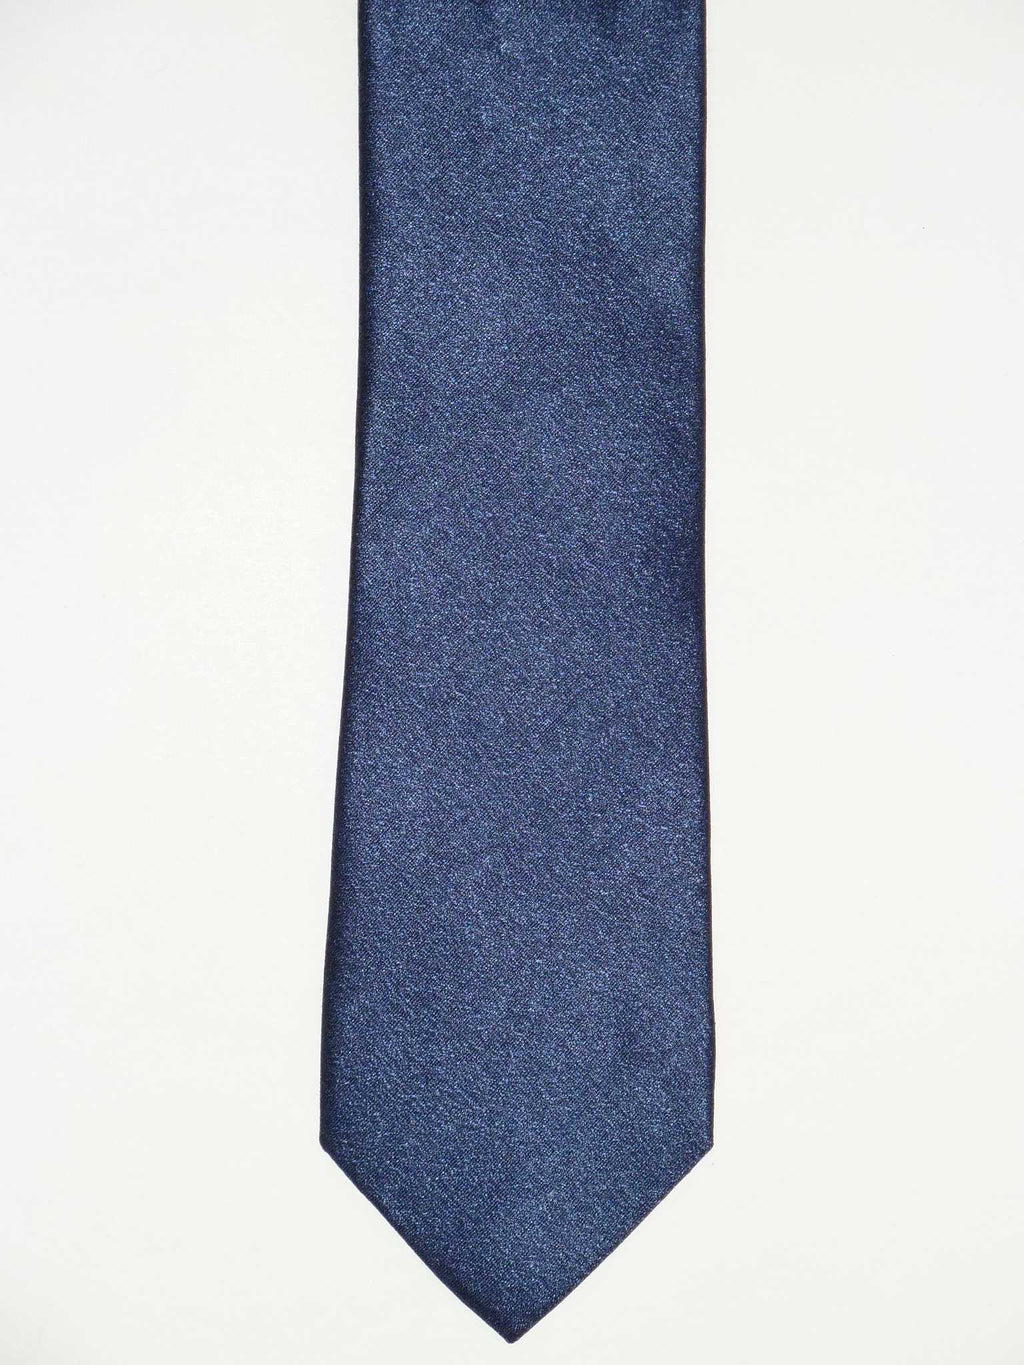 MAICA Krawatte, Royalblau Struktur, Seide, – offene 100% 7,5cm, Krawattenfabrik